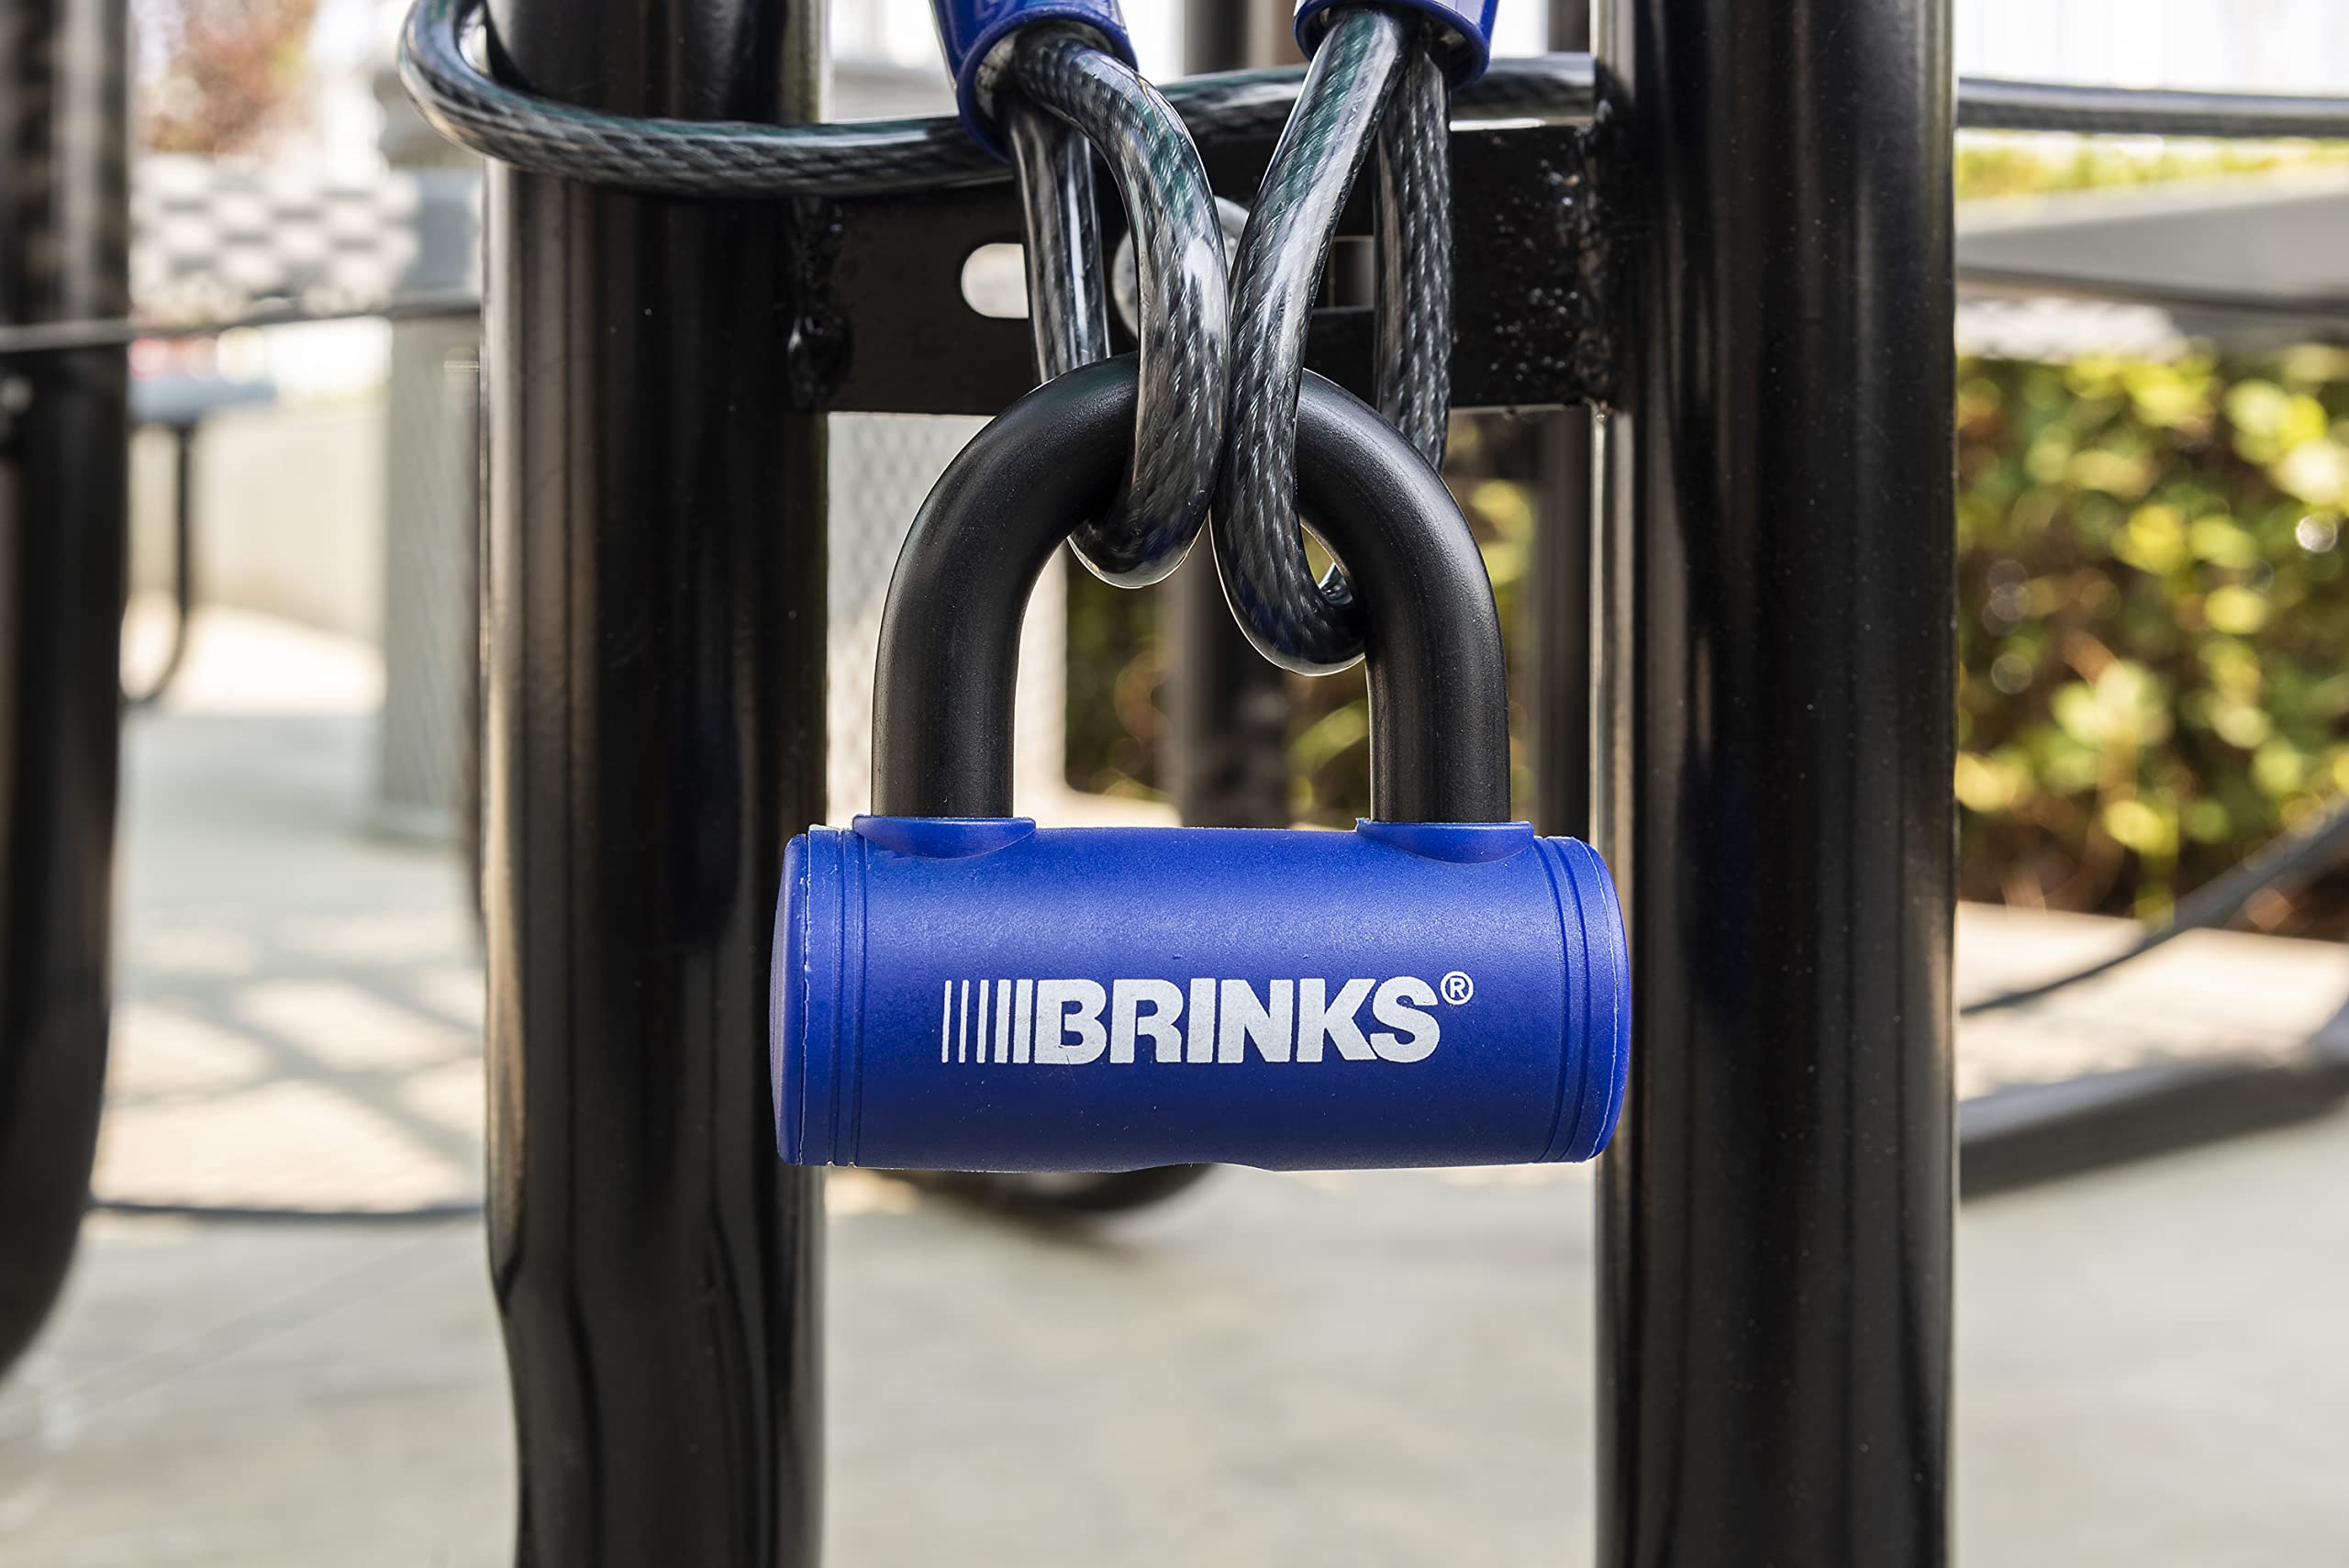 BRINKS - 3 7/8” Mini U-Bar Lock - Weather Resistant and Pick Resistant Bike Lock, Blue